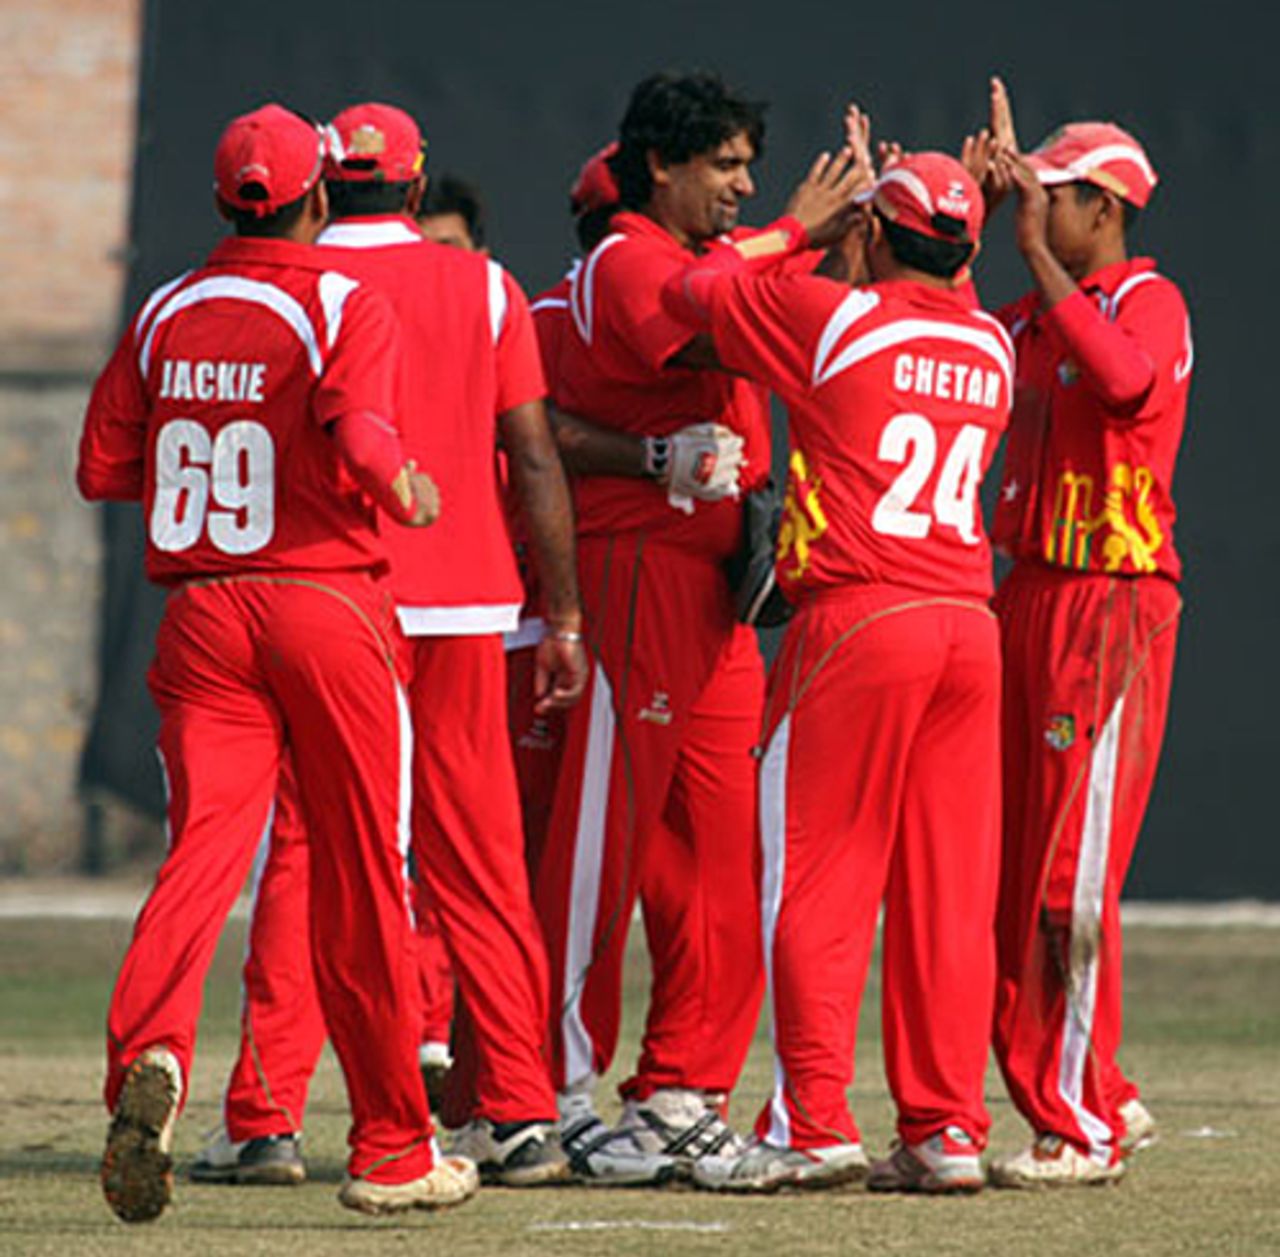 Saad Janjua took out Nepal's openers early, Nepal v Singapore, ICC World Cricket League Division Five, Lalitpur, February 21, 2010